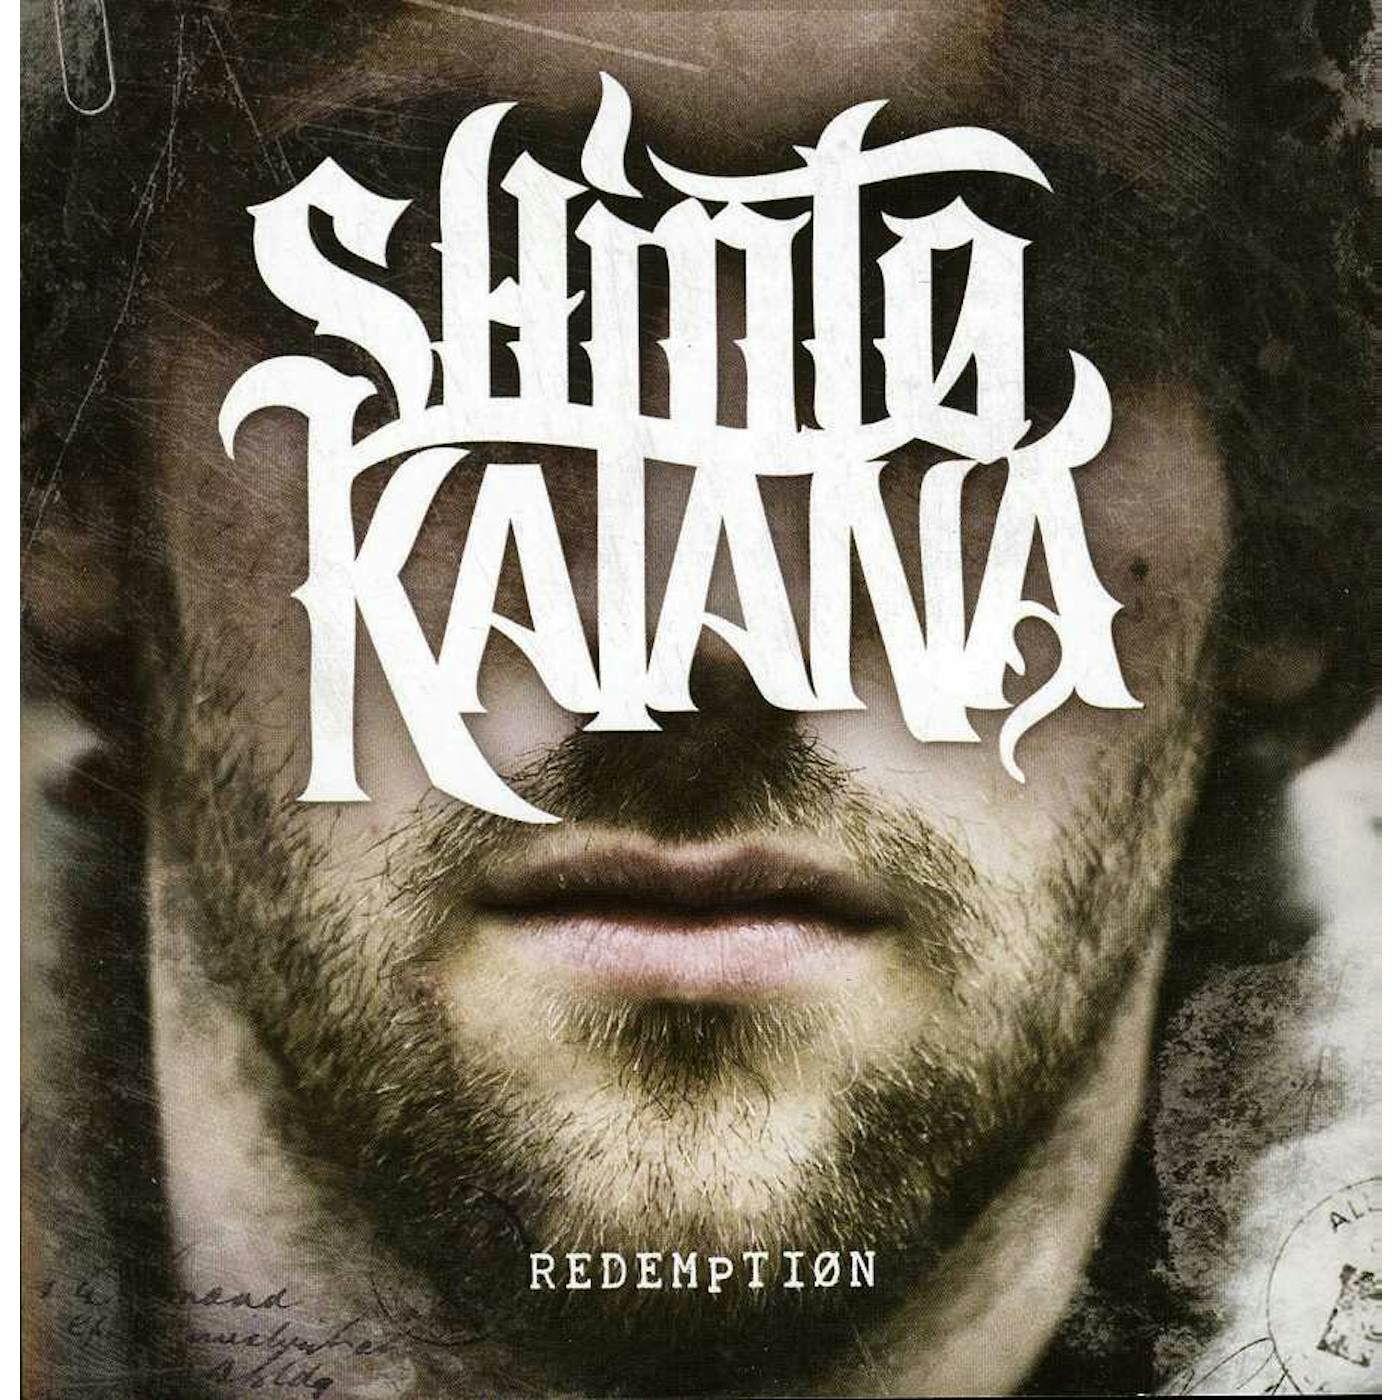 Shinto Katana REDEMPTION CD